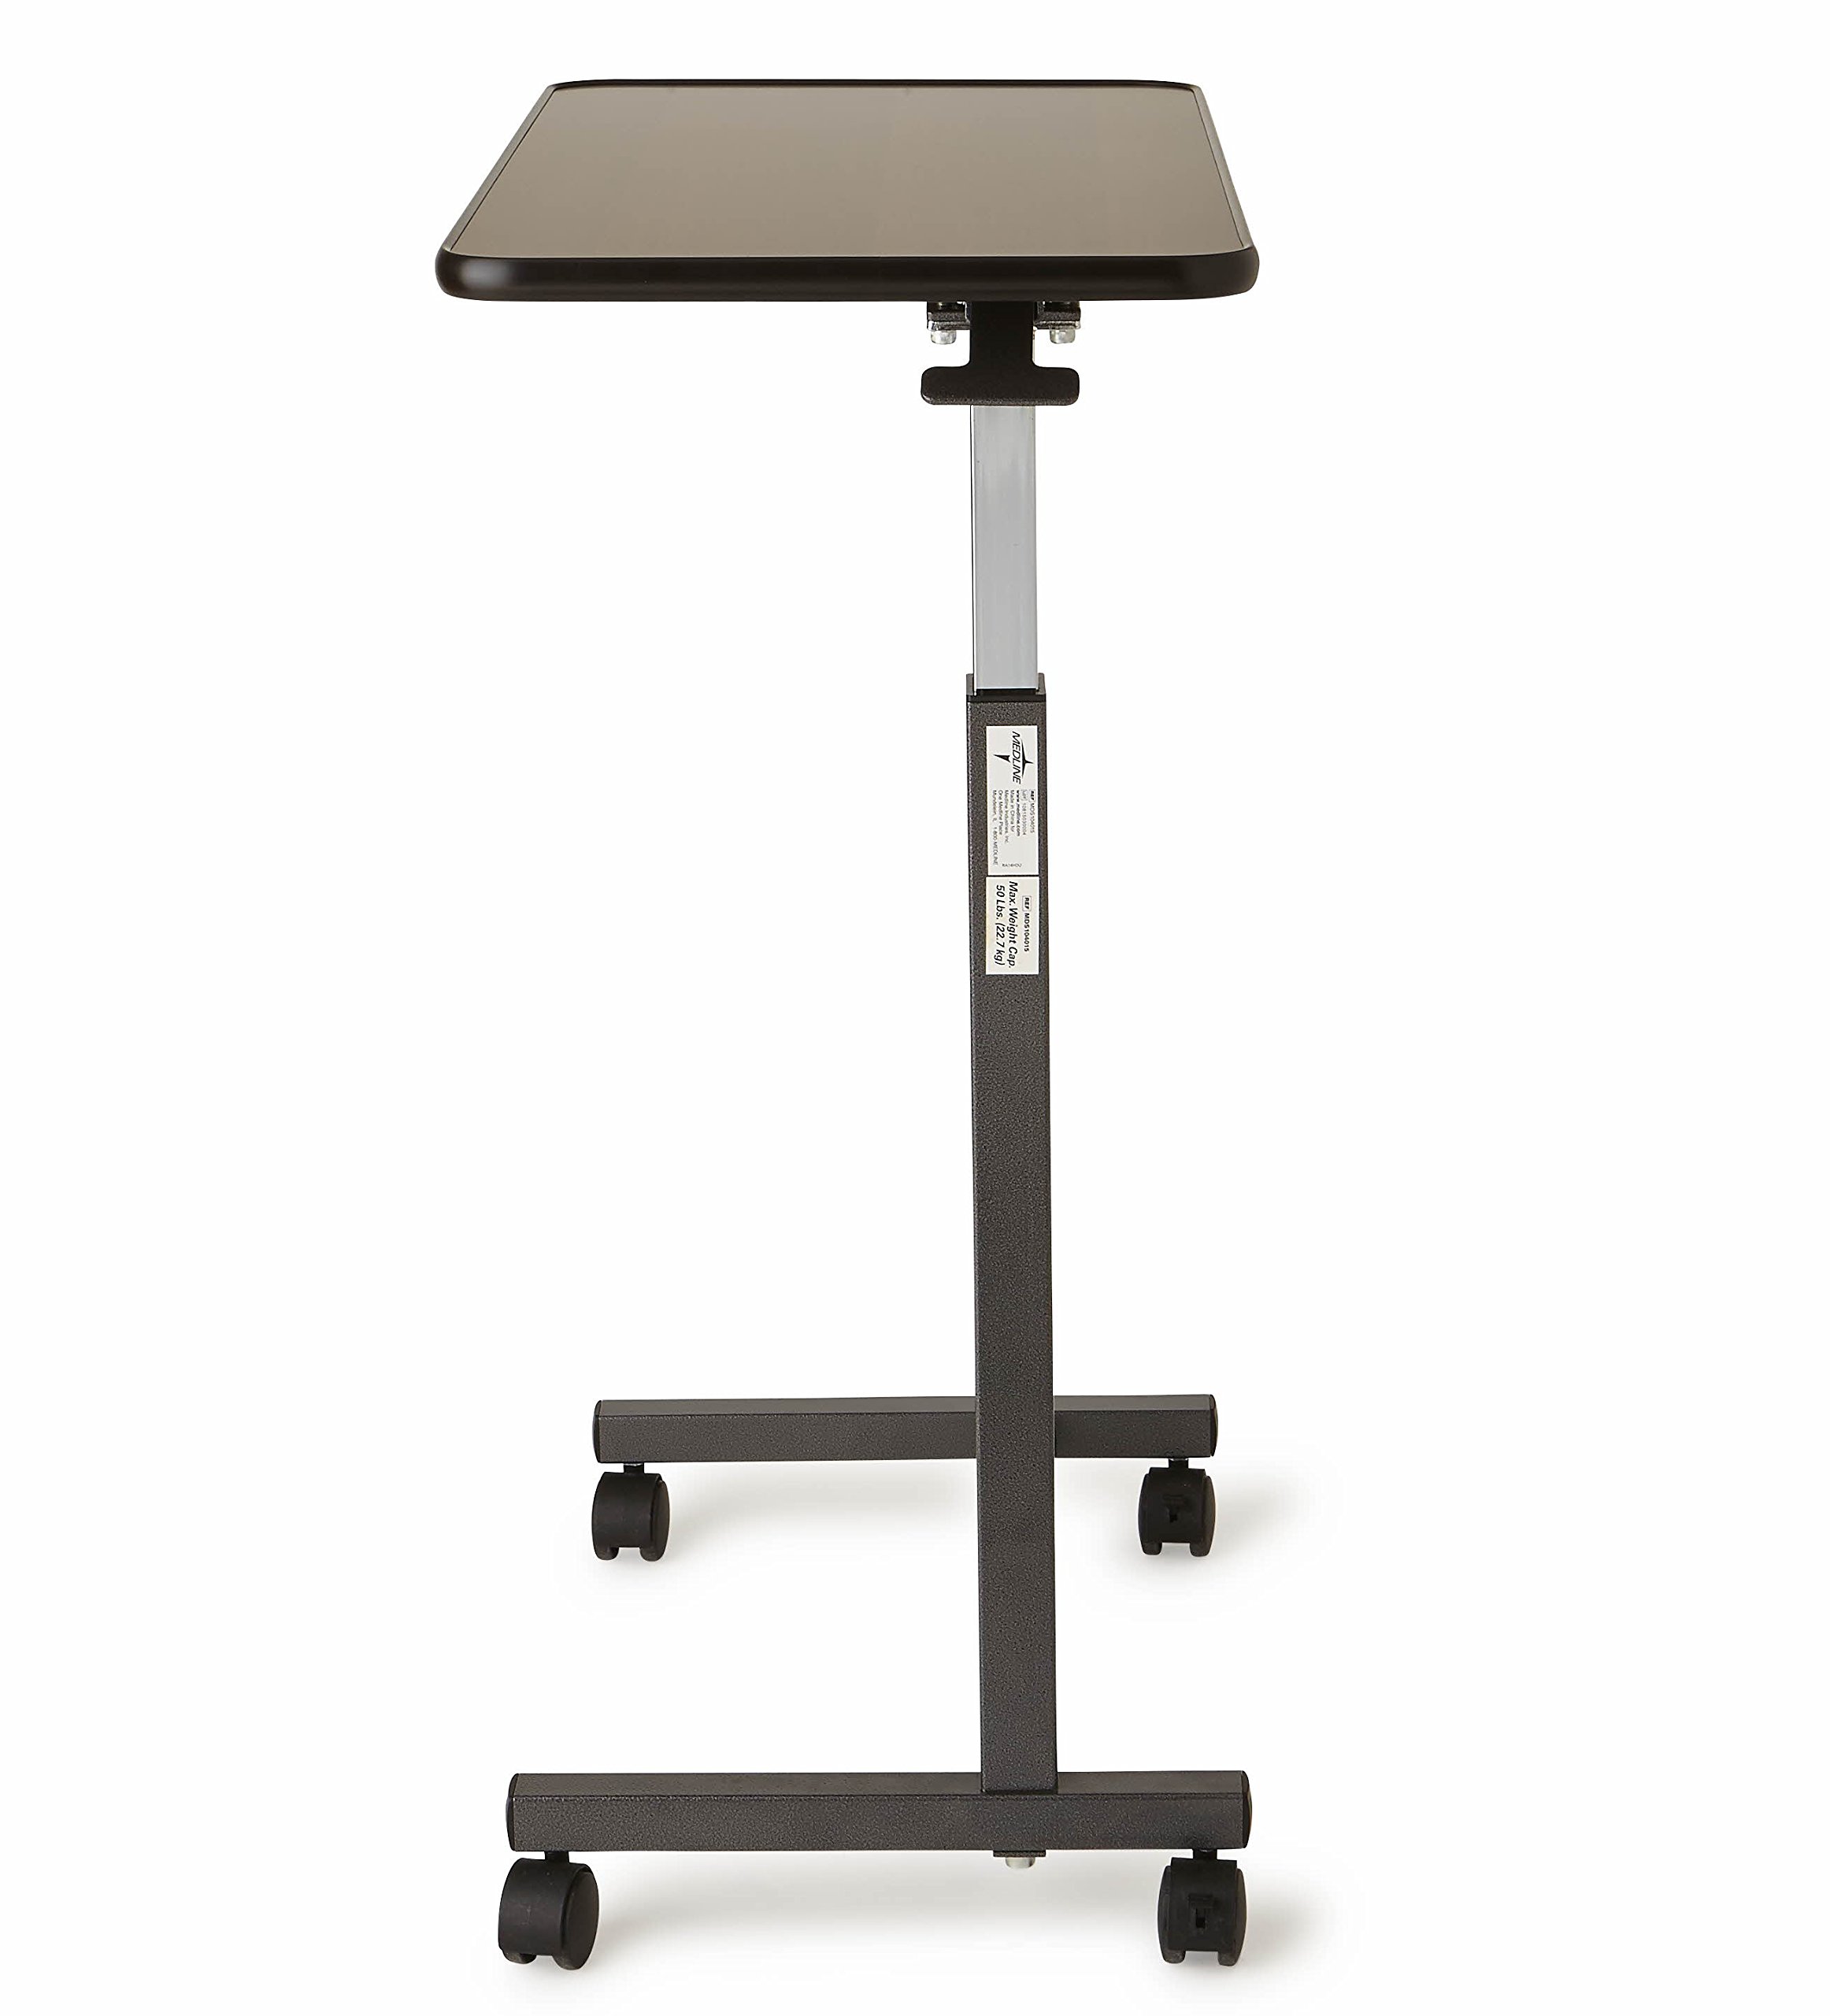 Medline Economy Overbed Table with Wheels - Versatile Use for Home, Nursing Home, Assisted Living or Hospital - Walnut Top, Silver Hammertone Base - Adjustable & Portable